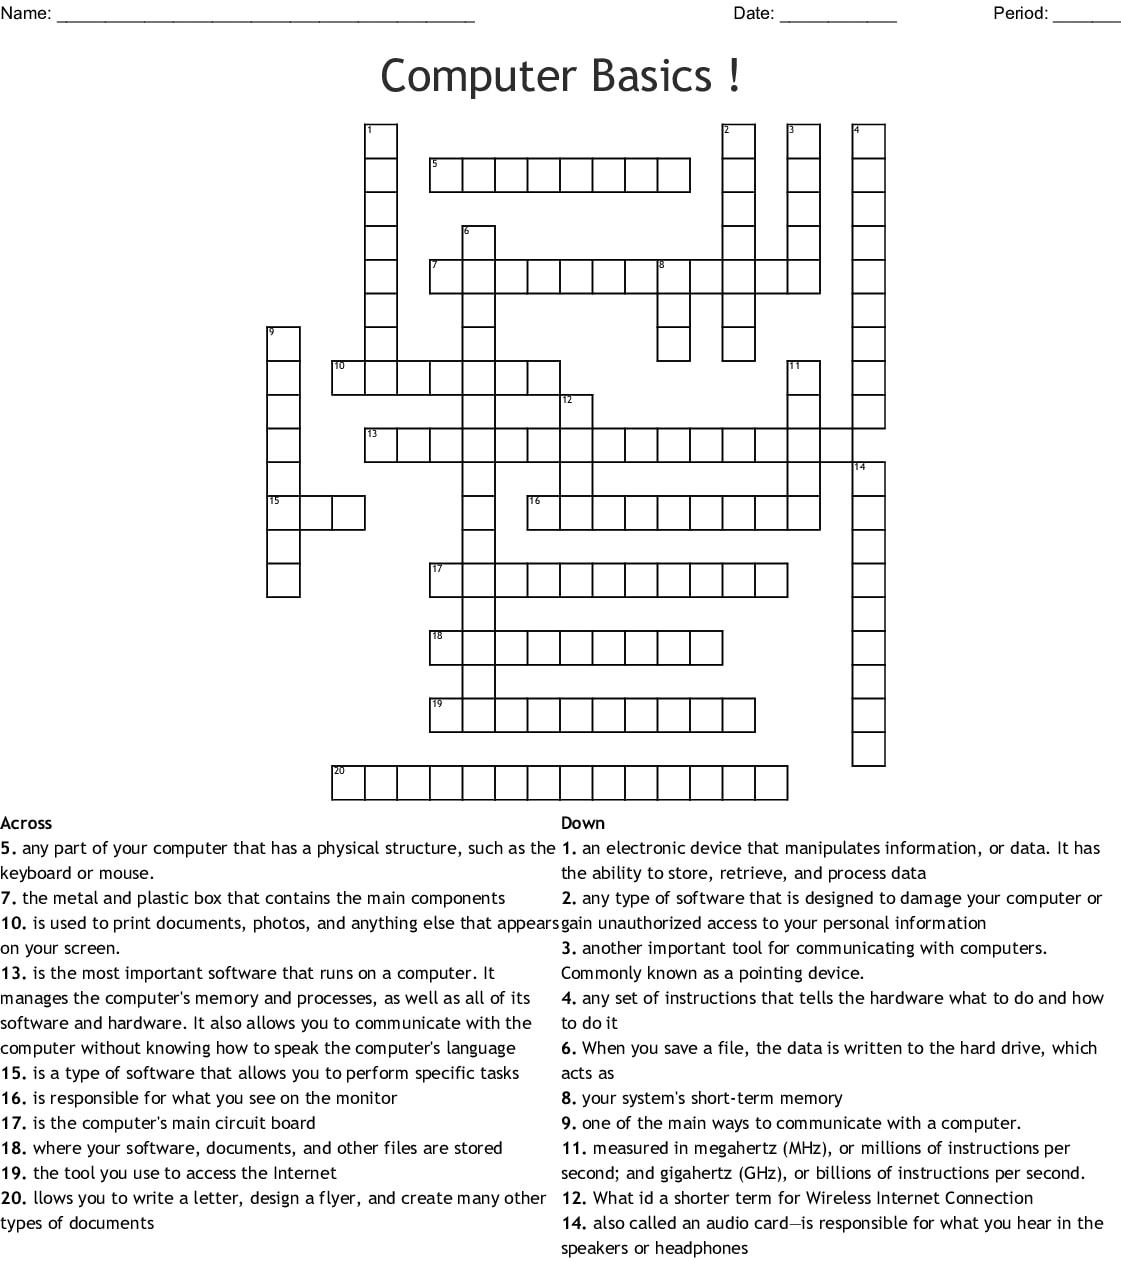 Printable Eugene Sheffer Crossword Puzzle_96300